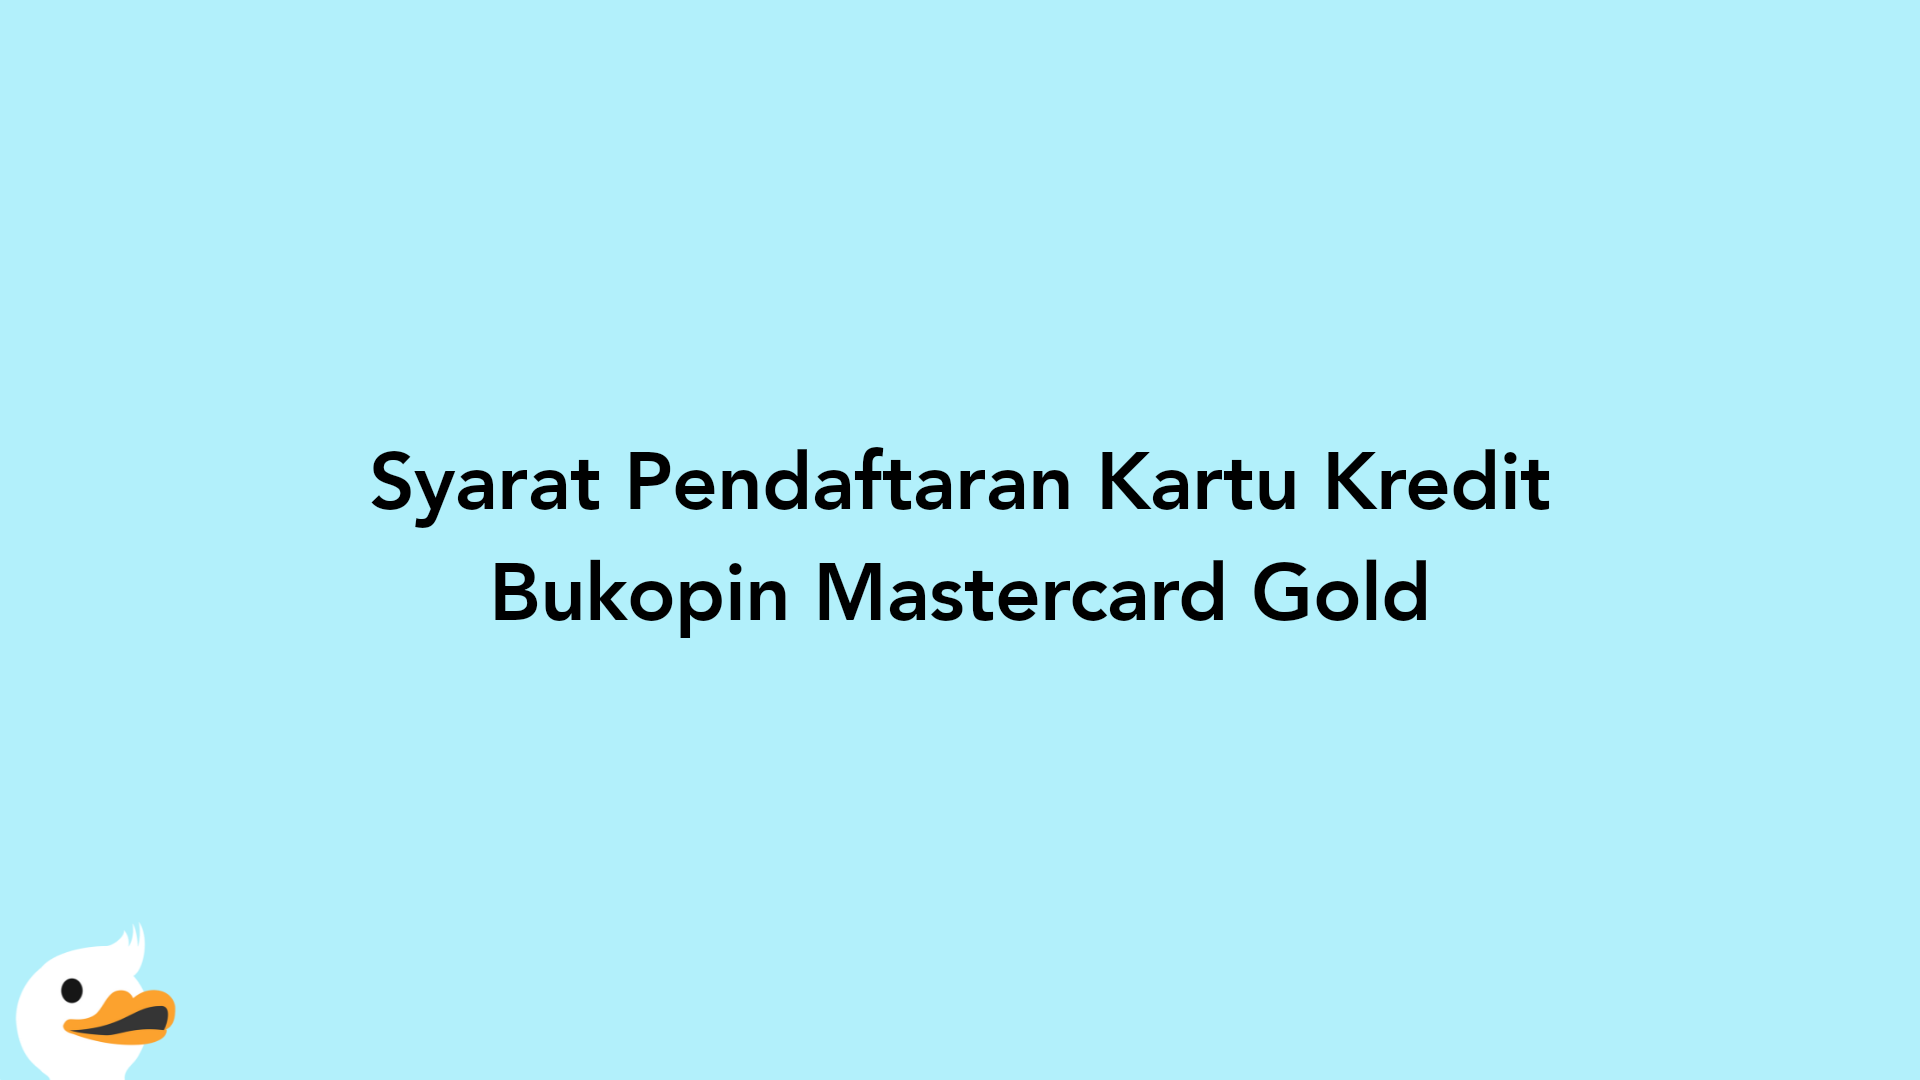 Syarat Pendaftaran Kartu Kredit Bukopin Mastercard Gold